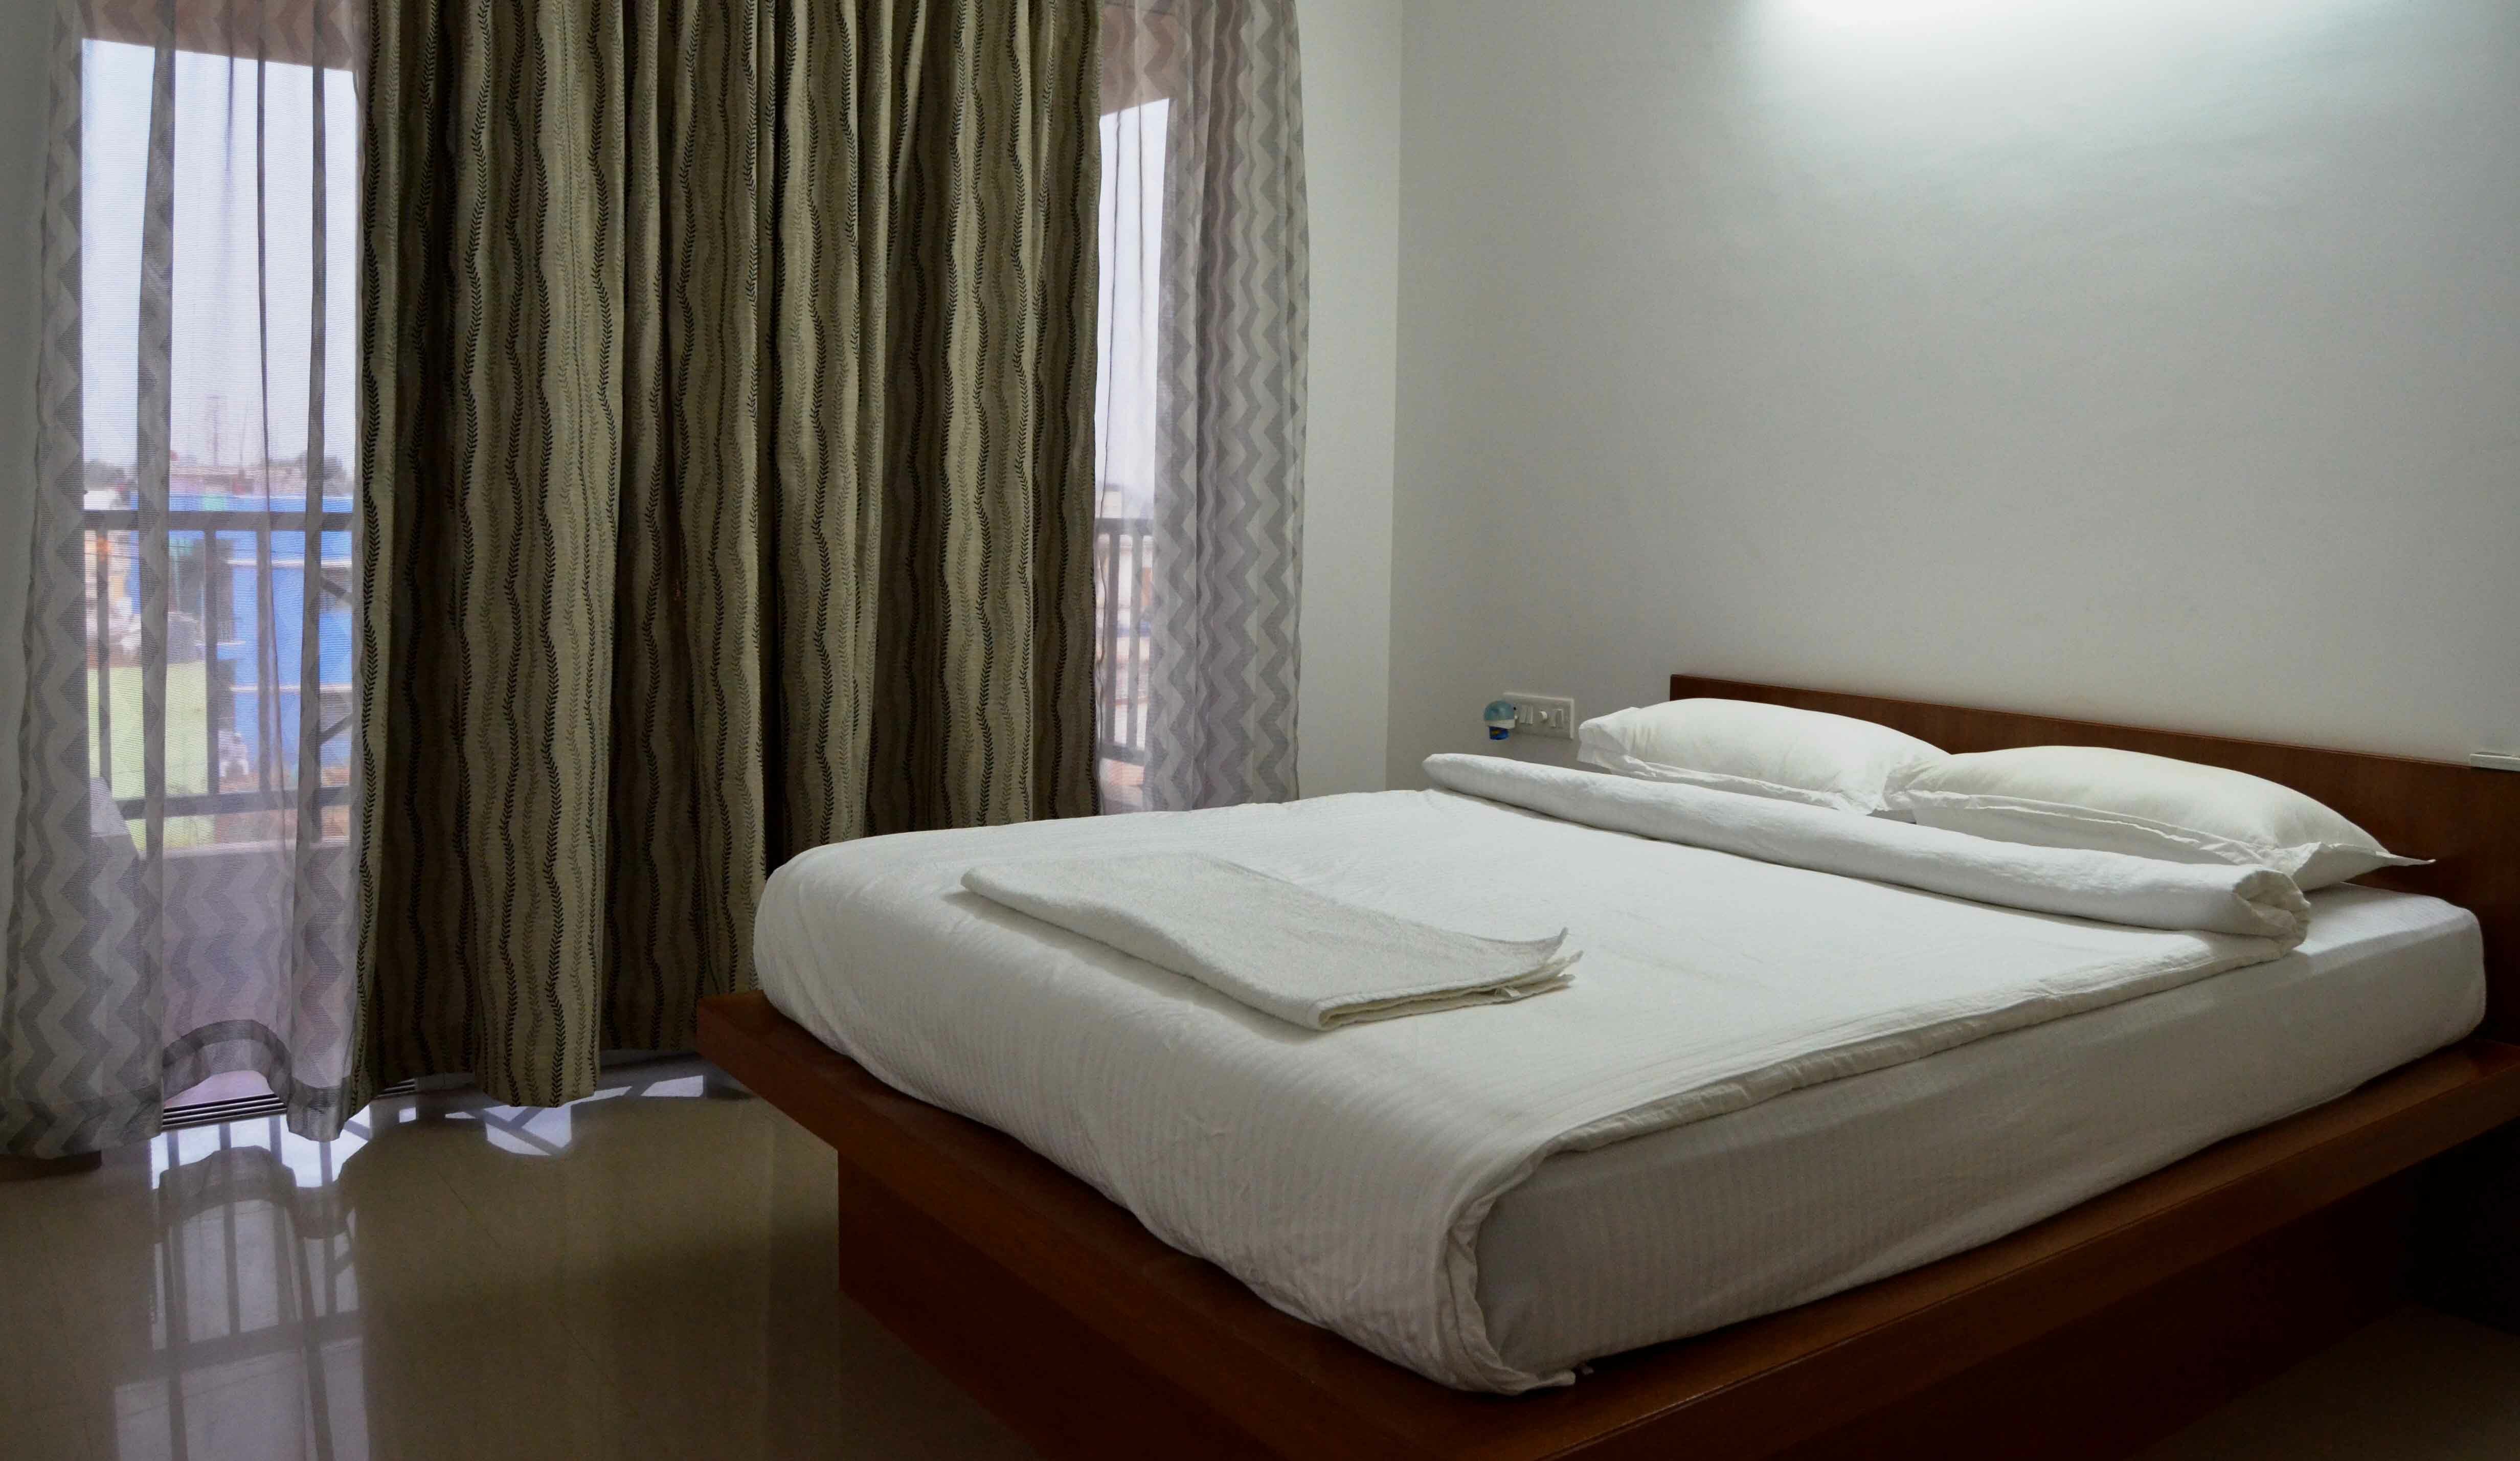 Serviced apartments near manyata tech park in Bangalore